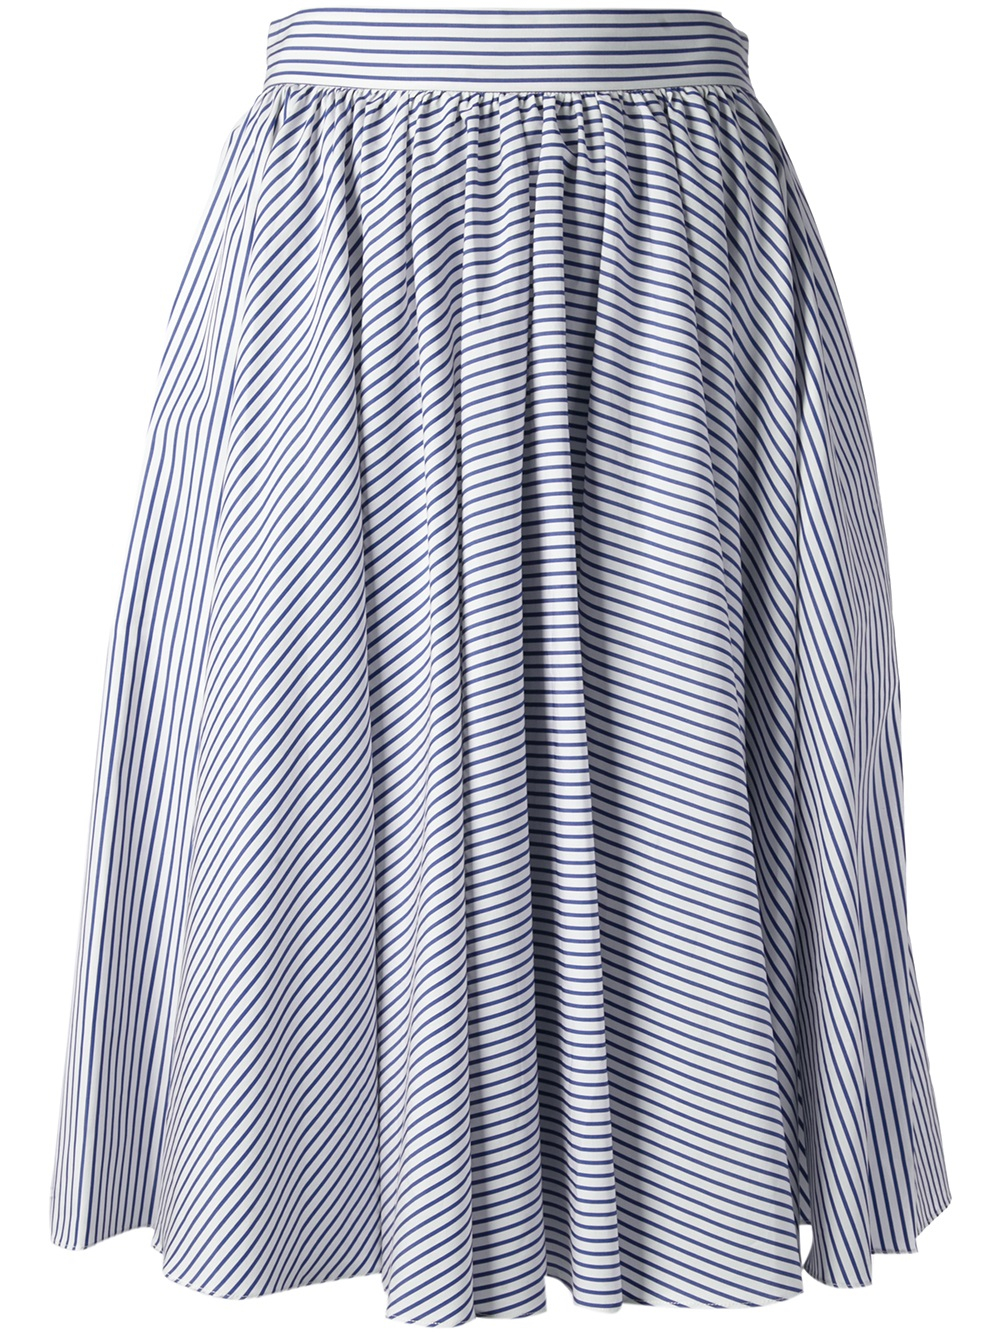 Jean Paul Gaultier Striped High Waisted Skirt in Blue | Lyst